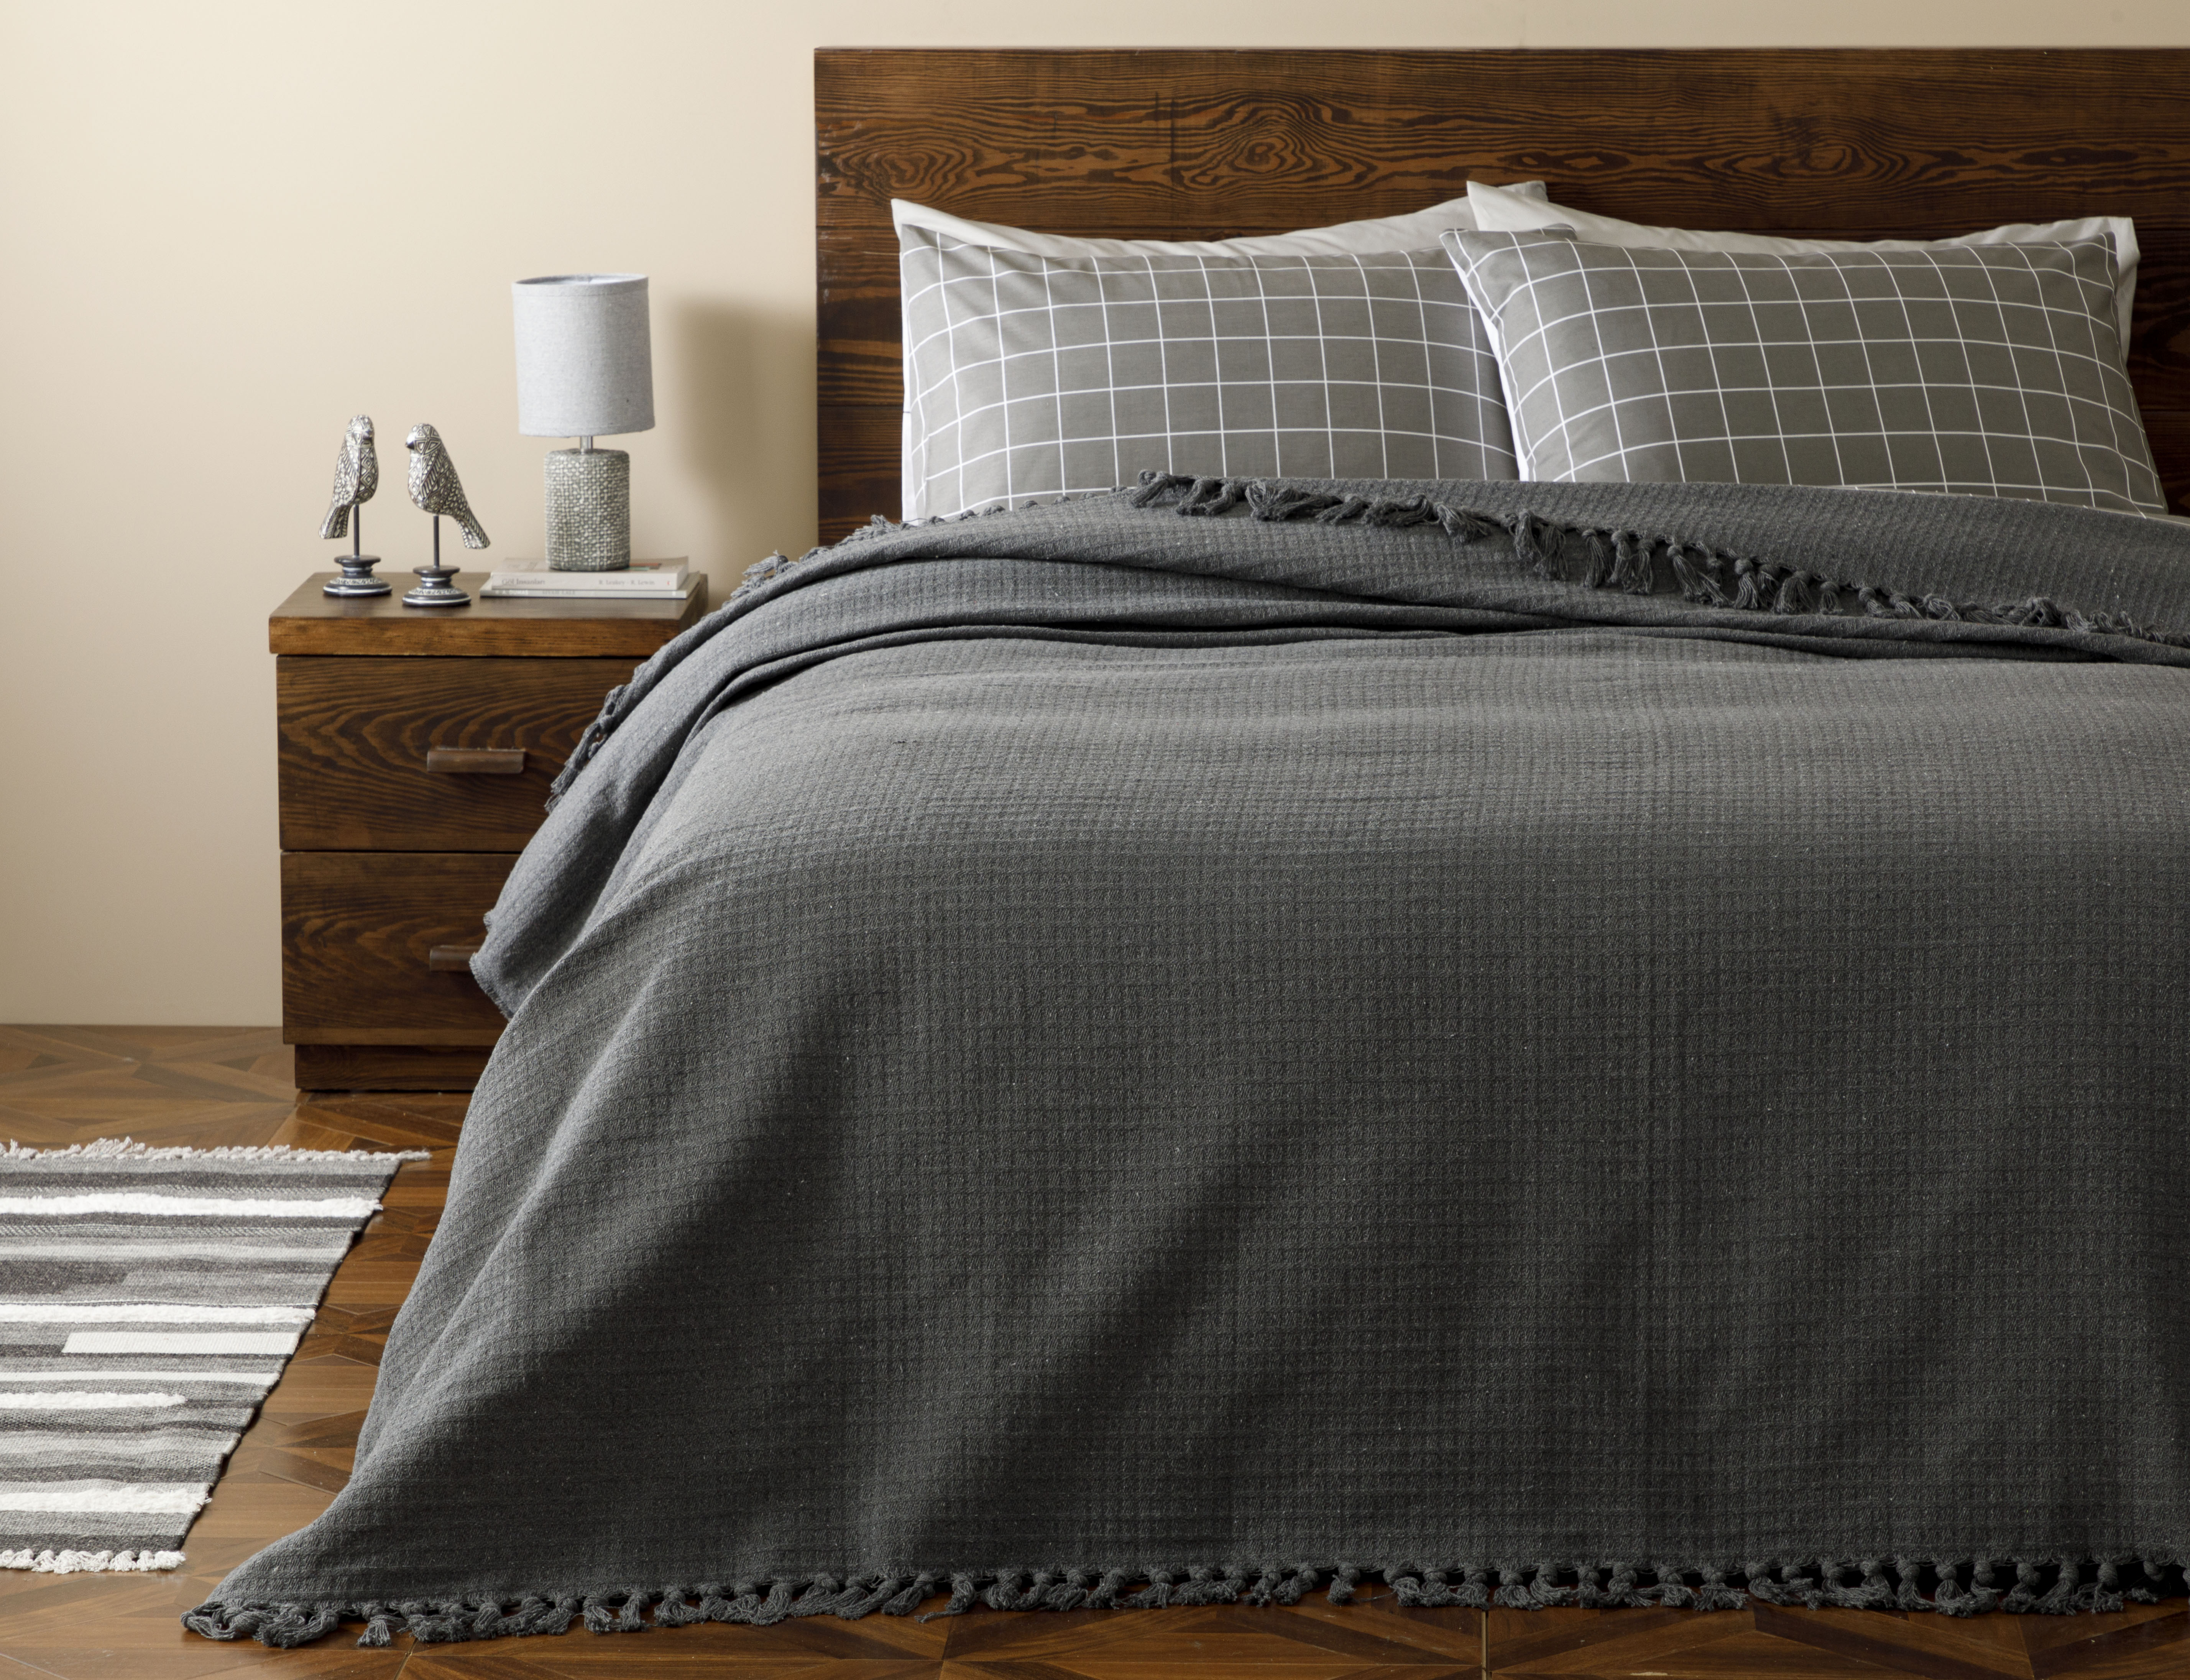 Plaid Cotton Double Bed Cover 240x260 Cm Dark Gray